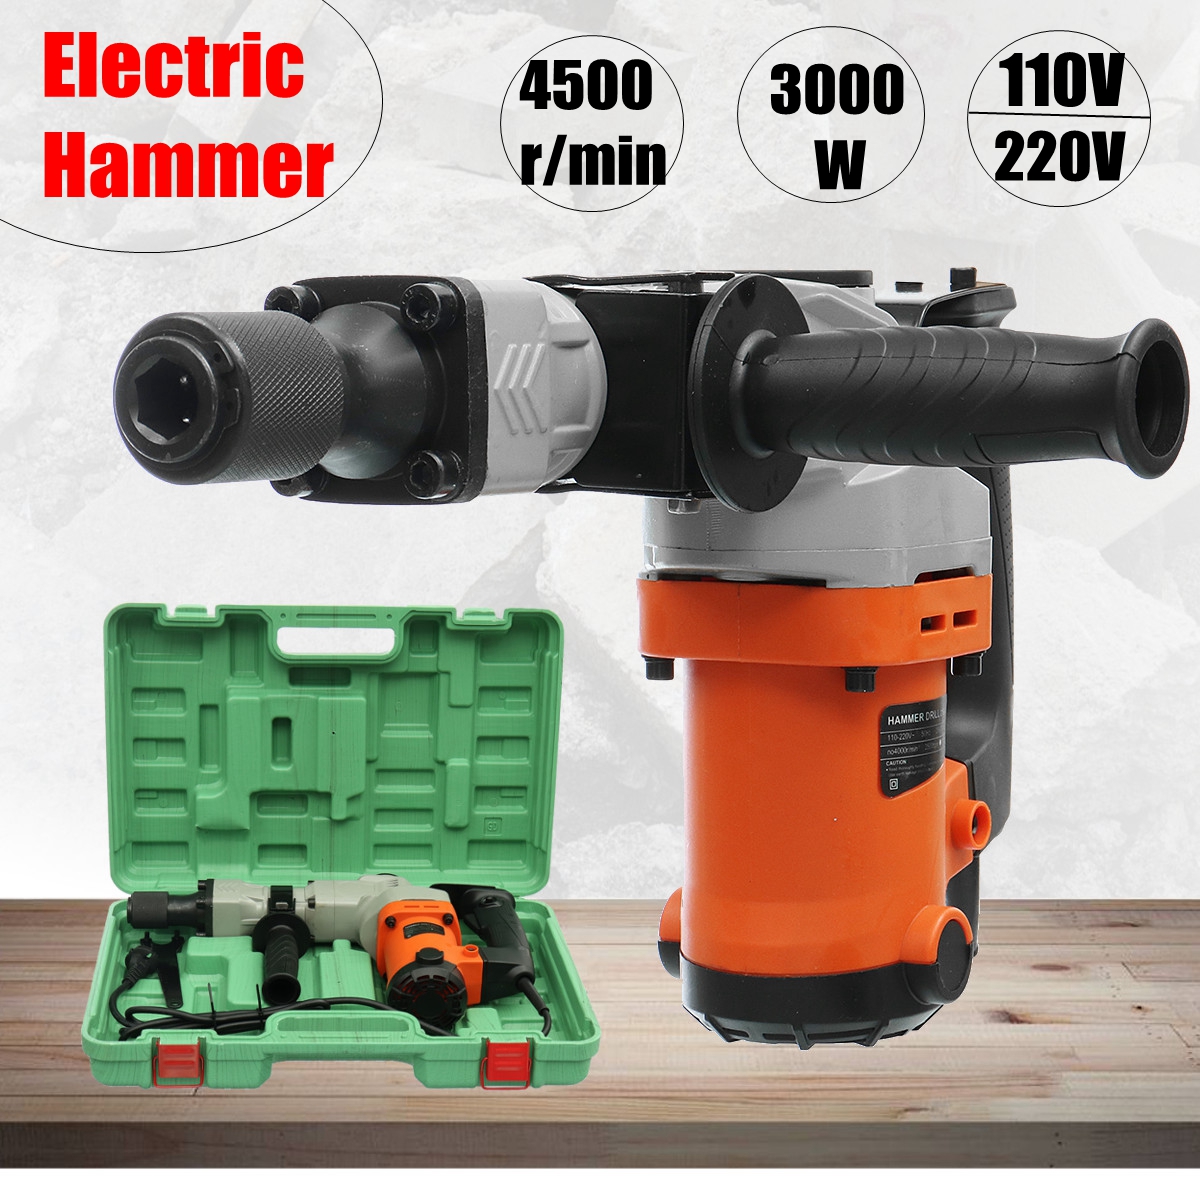 3000W-3000BPM-4500RMin-Electric-Hammer-Demolition-Hammers-Jackhammer-Concrete-Breaker-With-Case-1300390-9